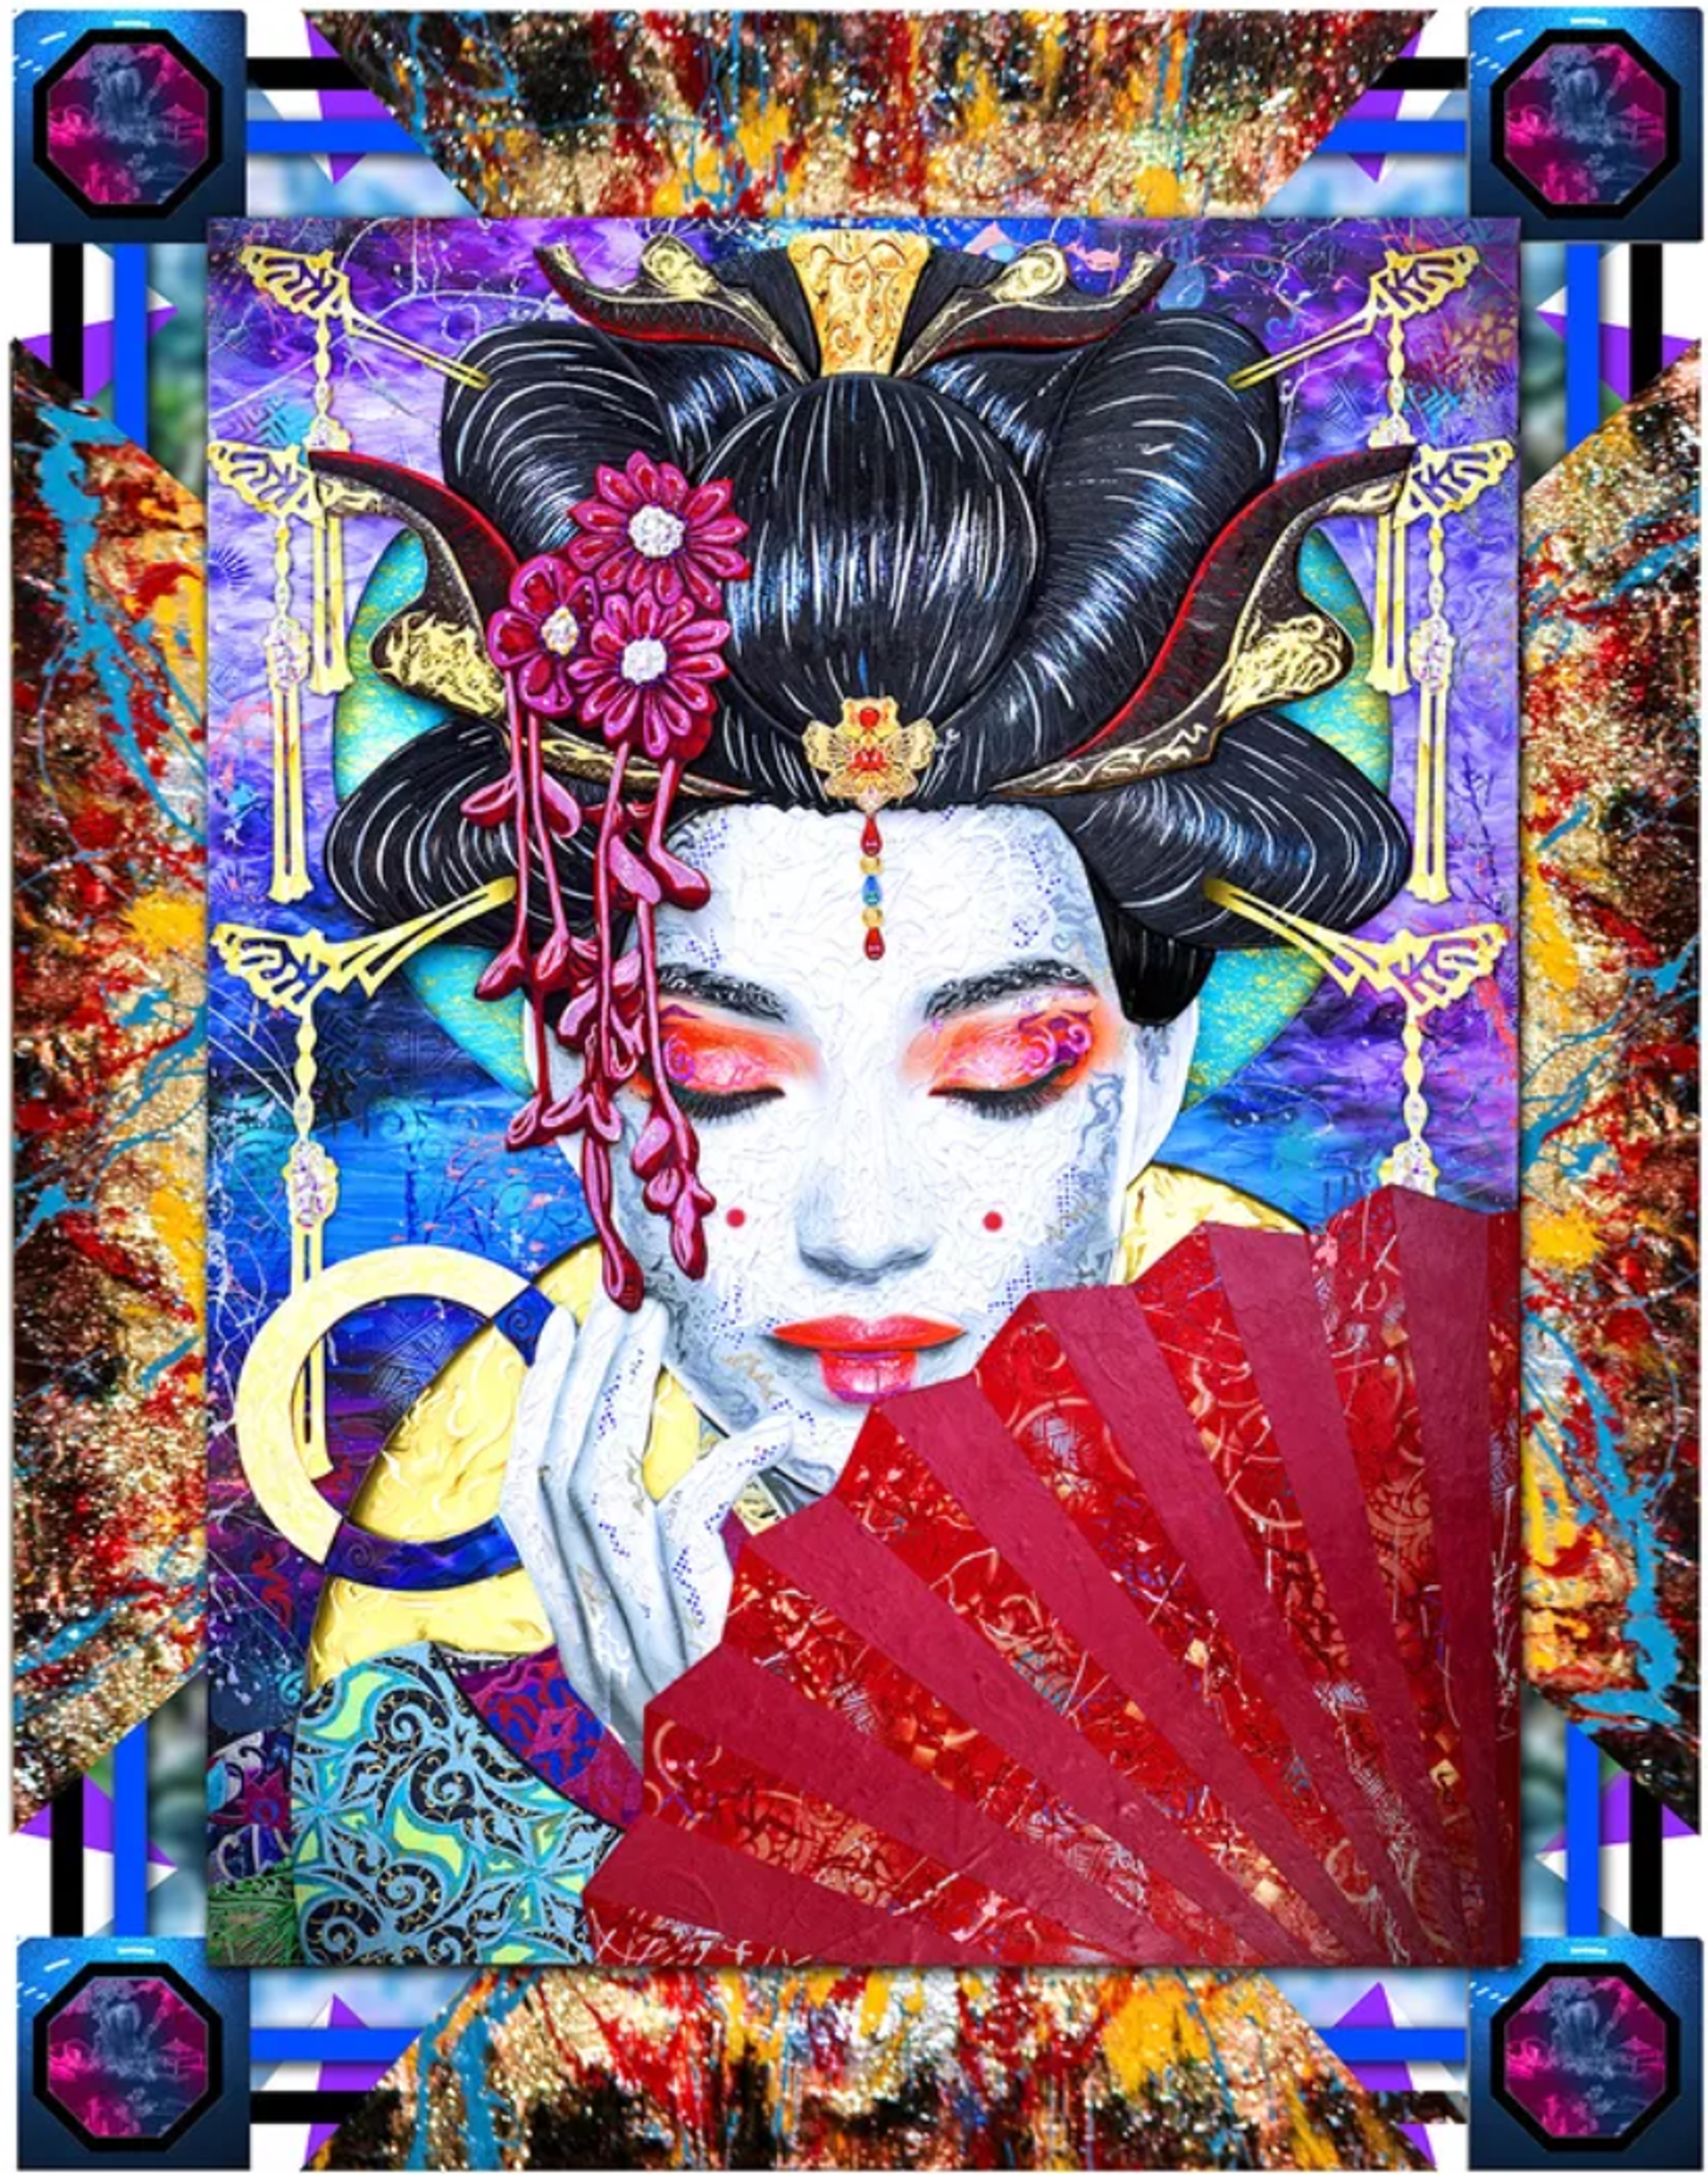 GG the Geisha Girl by Brayden Bugazzi